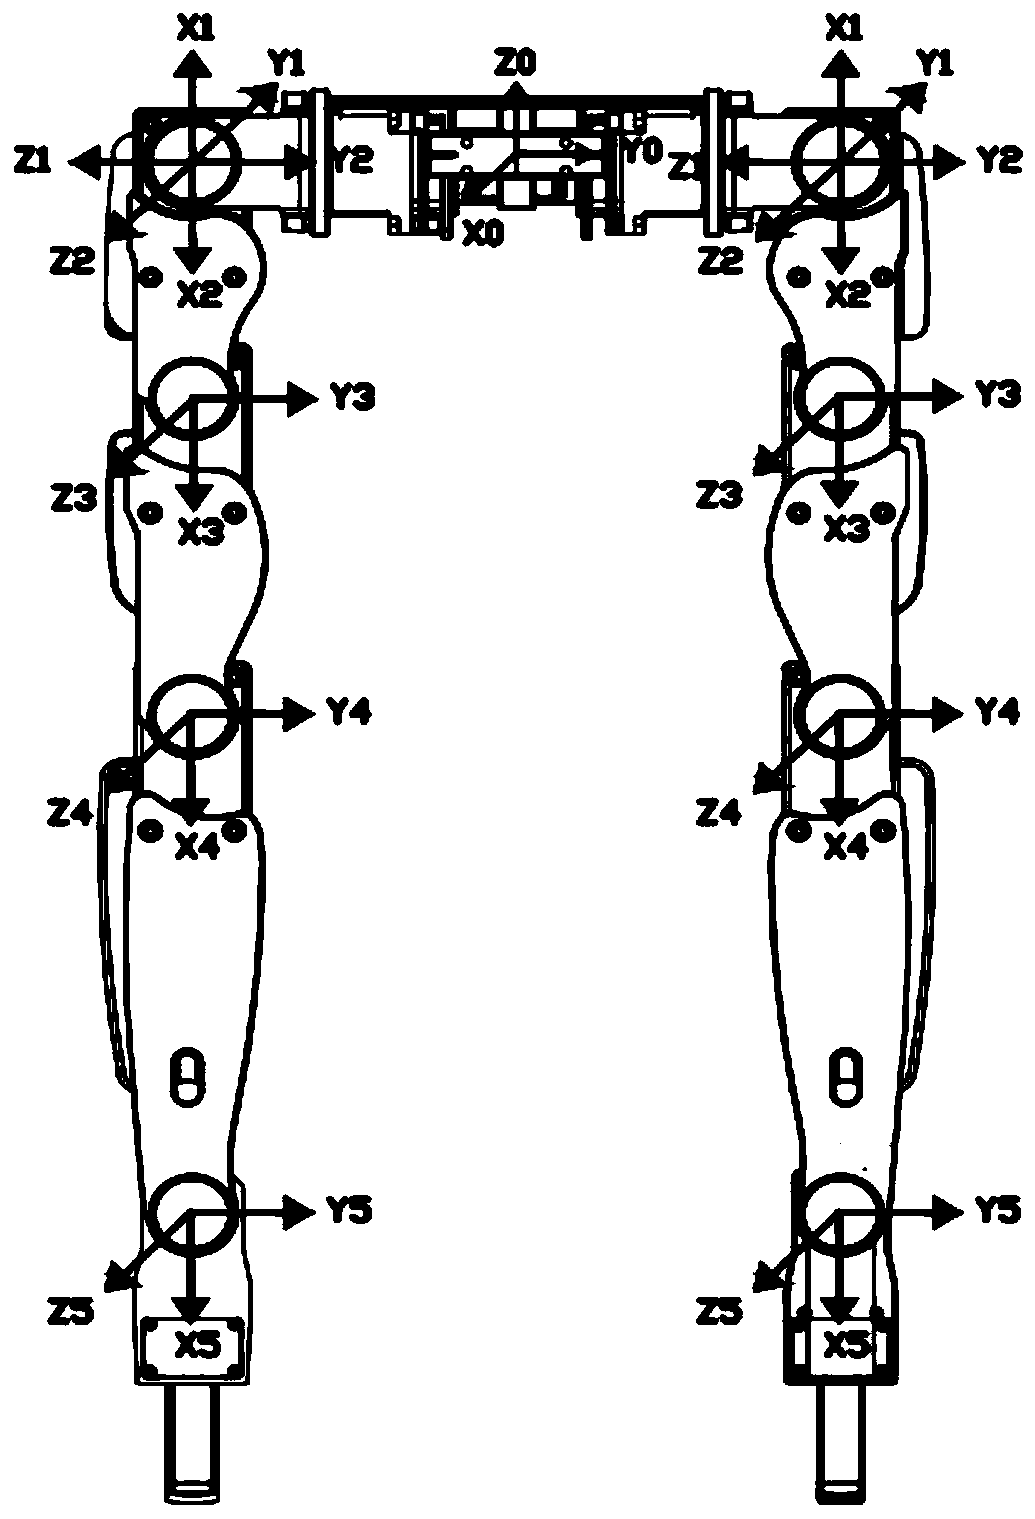 Flexible control method for mechanical arm based on dynamics